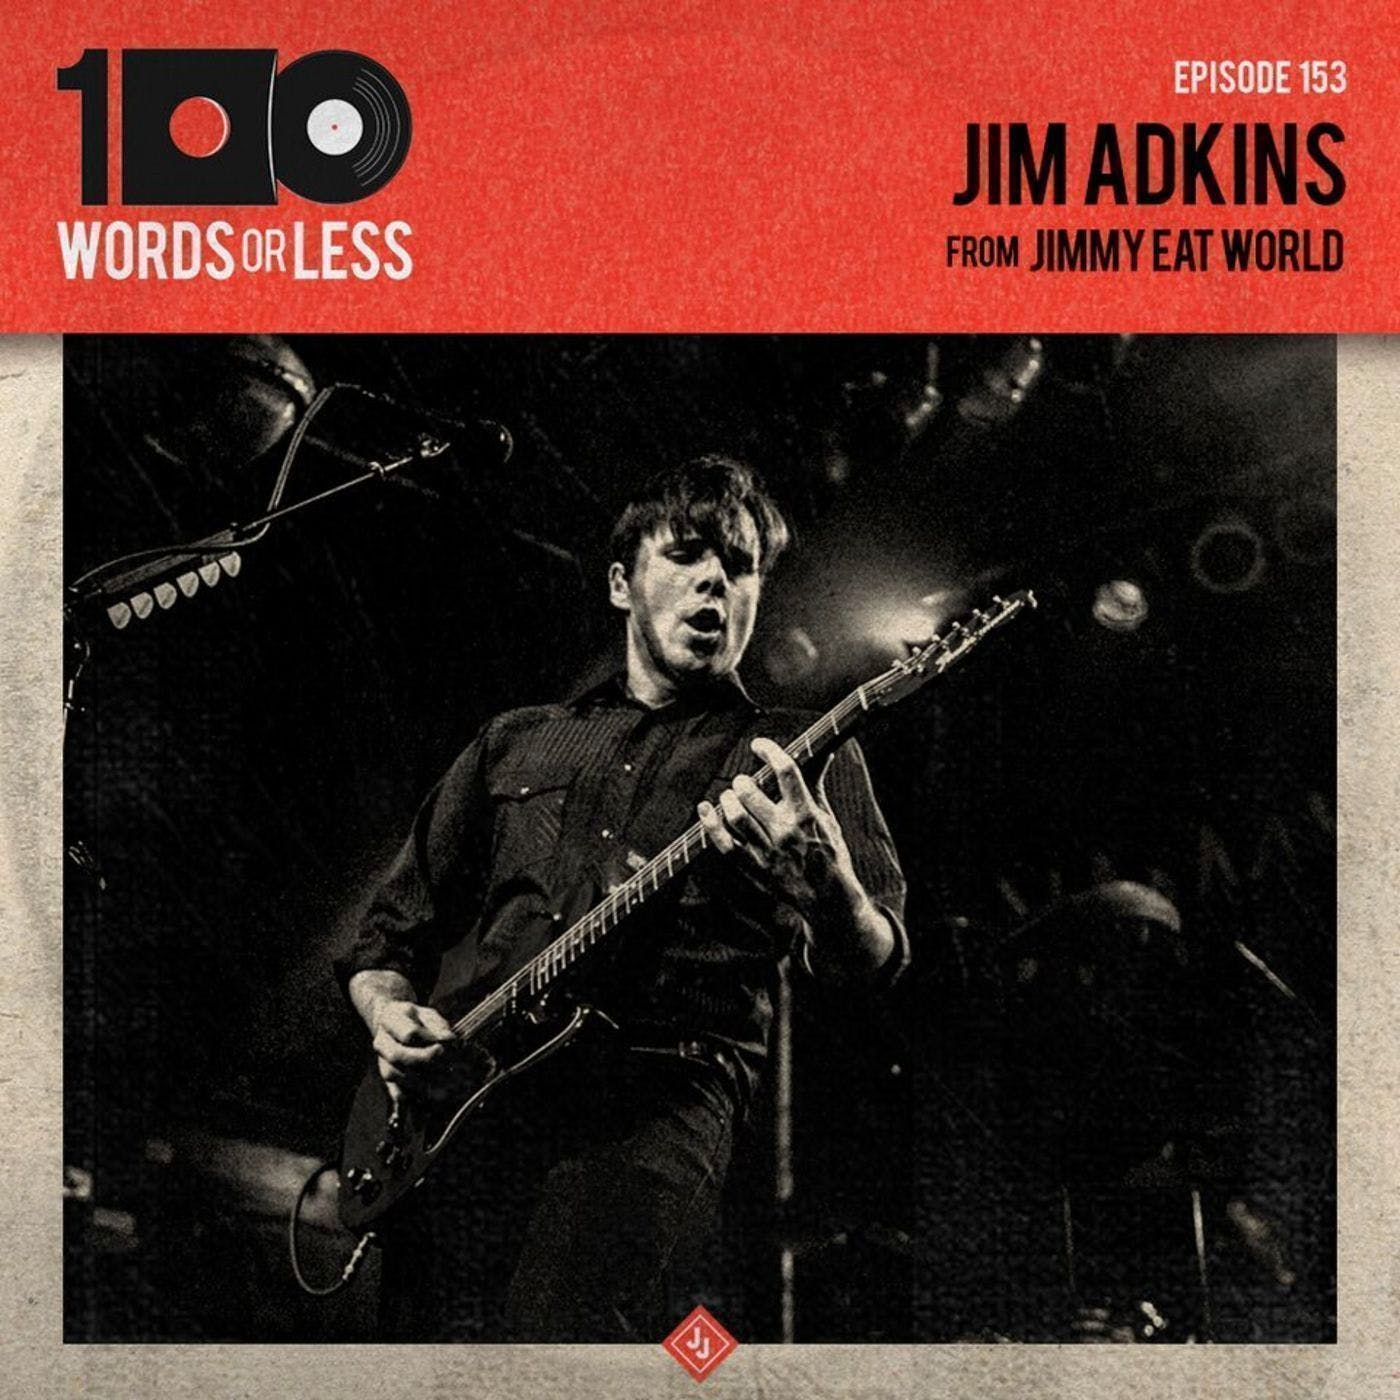 Jim Adkins from Jimmy Eat World